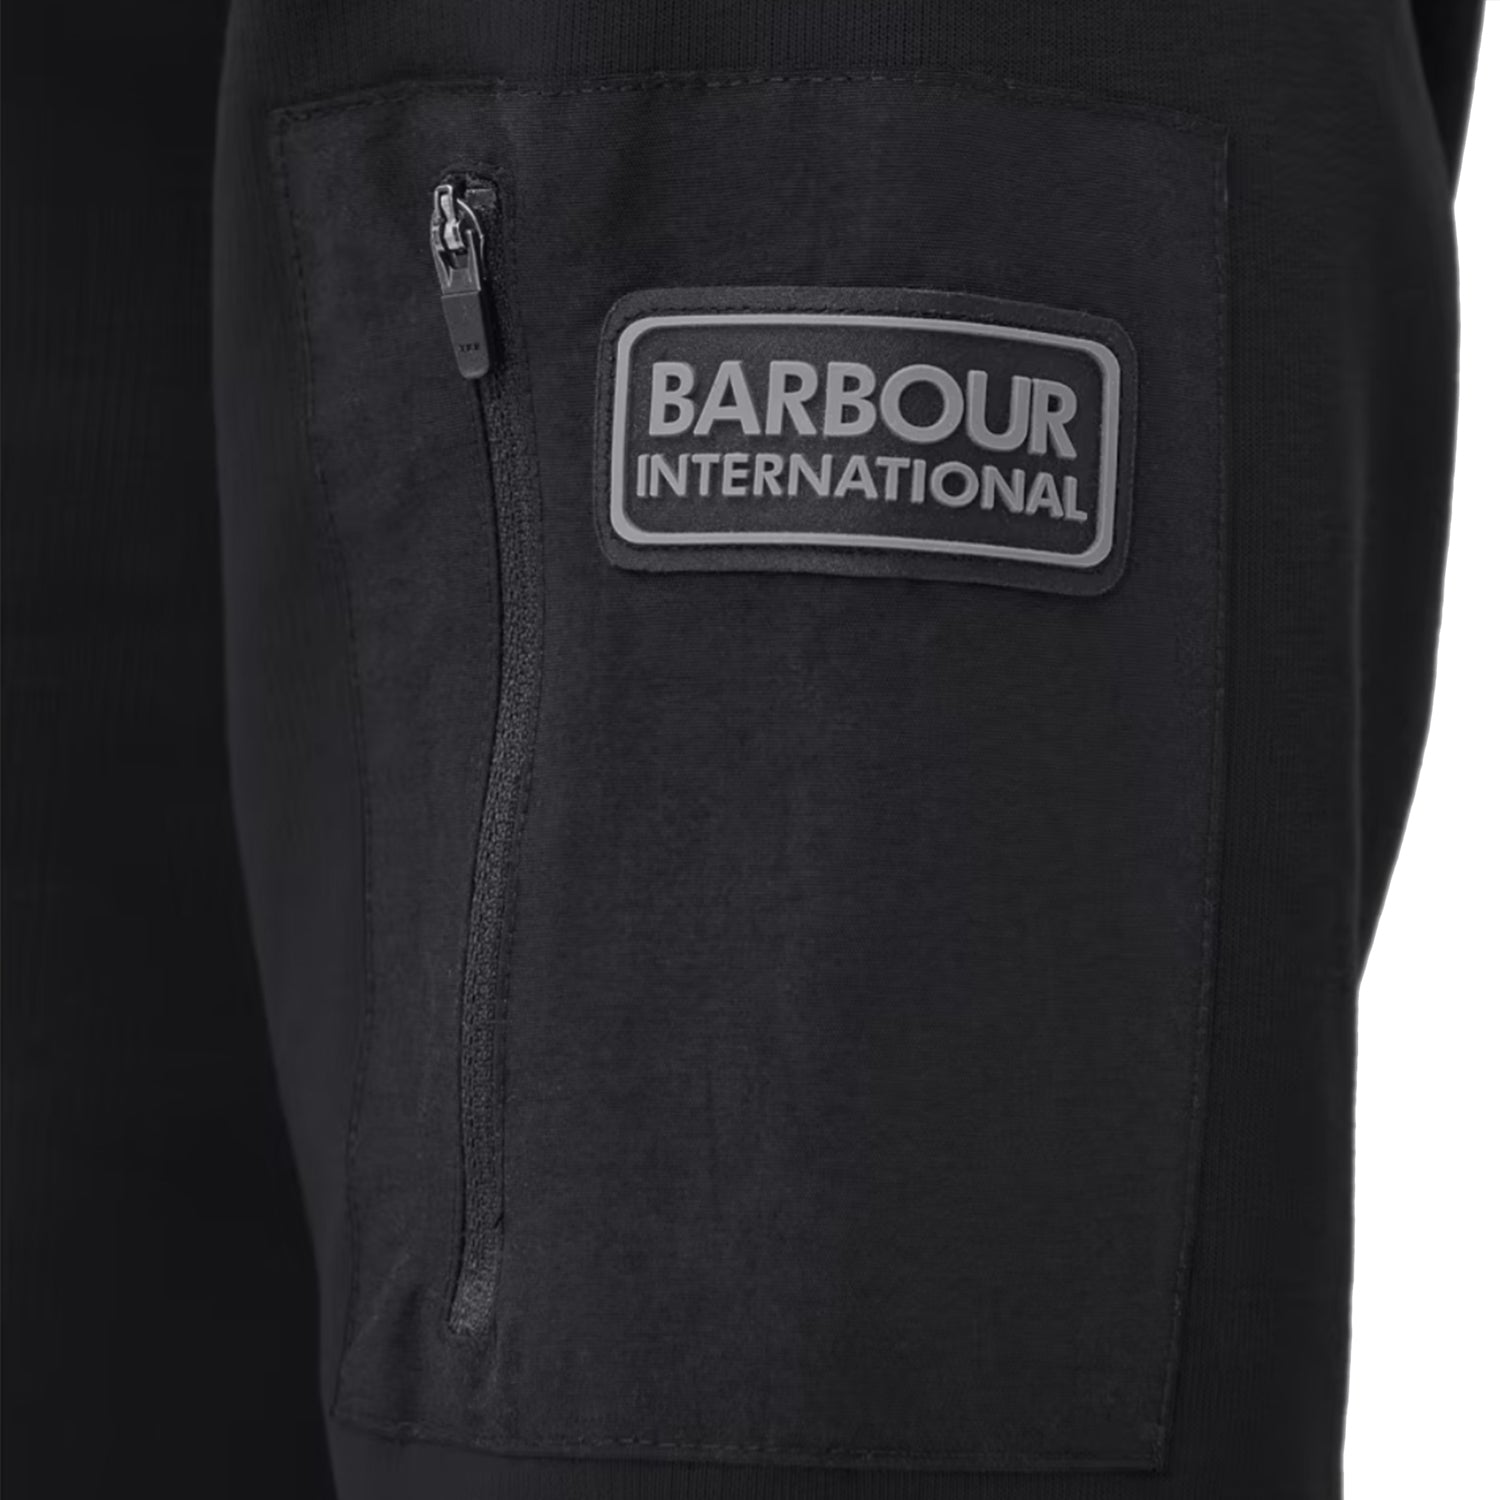 Barbour International Grip Crew Sweat - Black